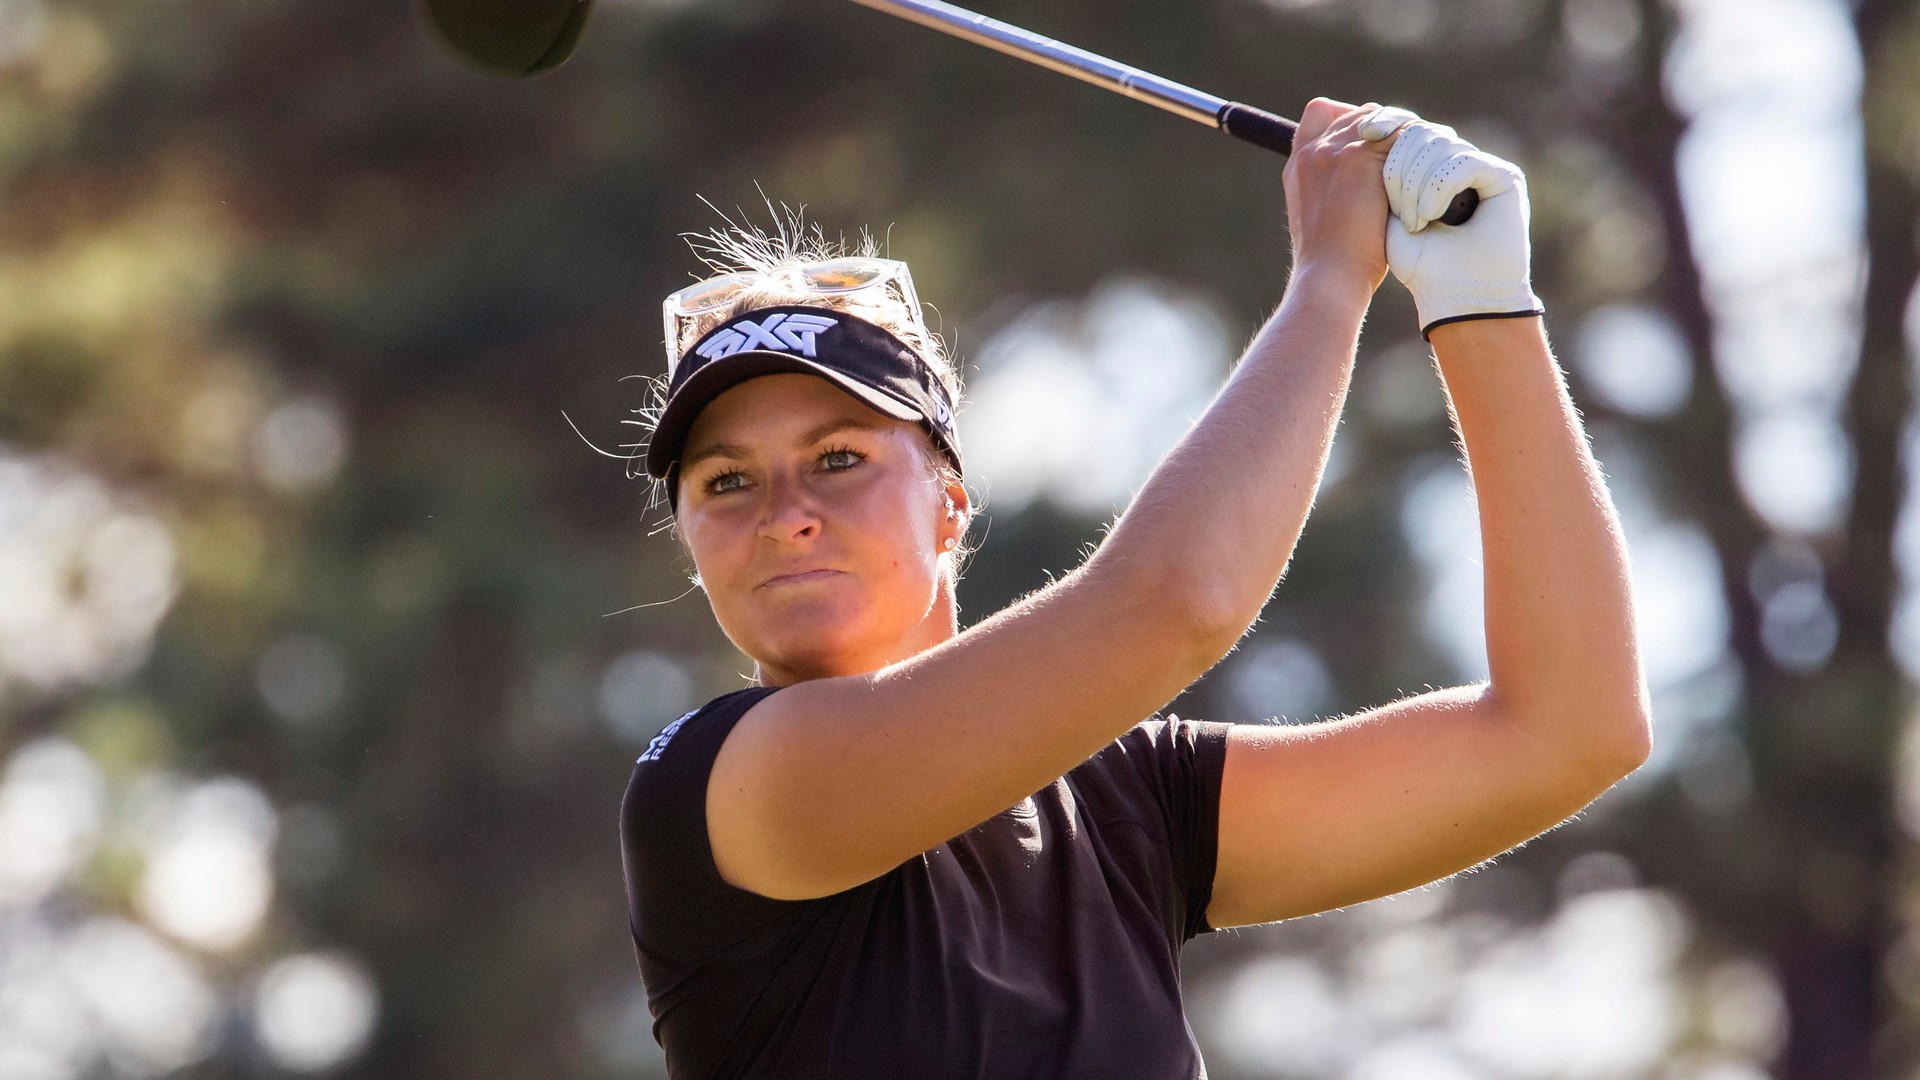 Anna Nordqvist alone Swedish women s golf competition: a little spoiled